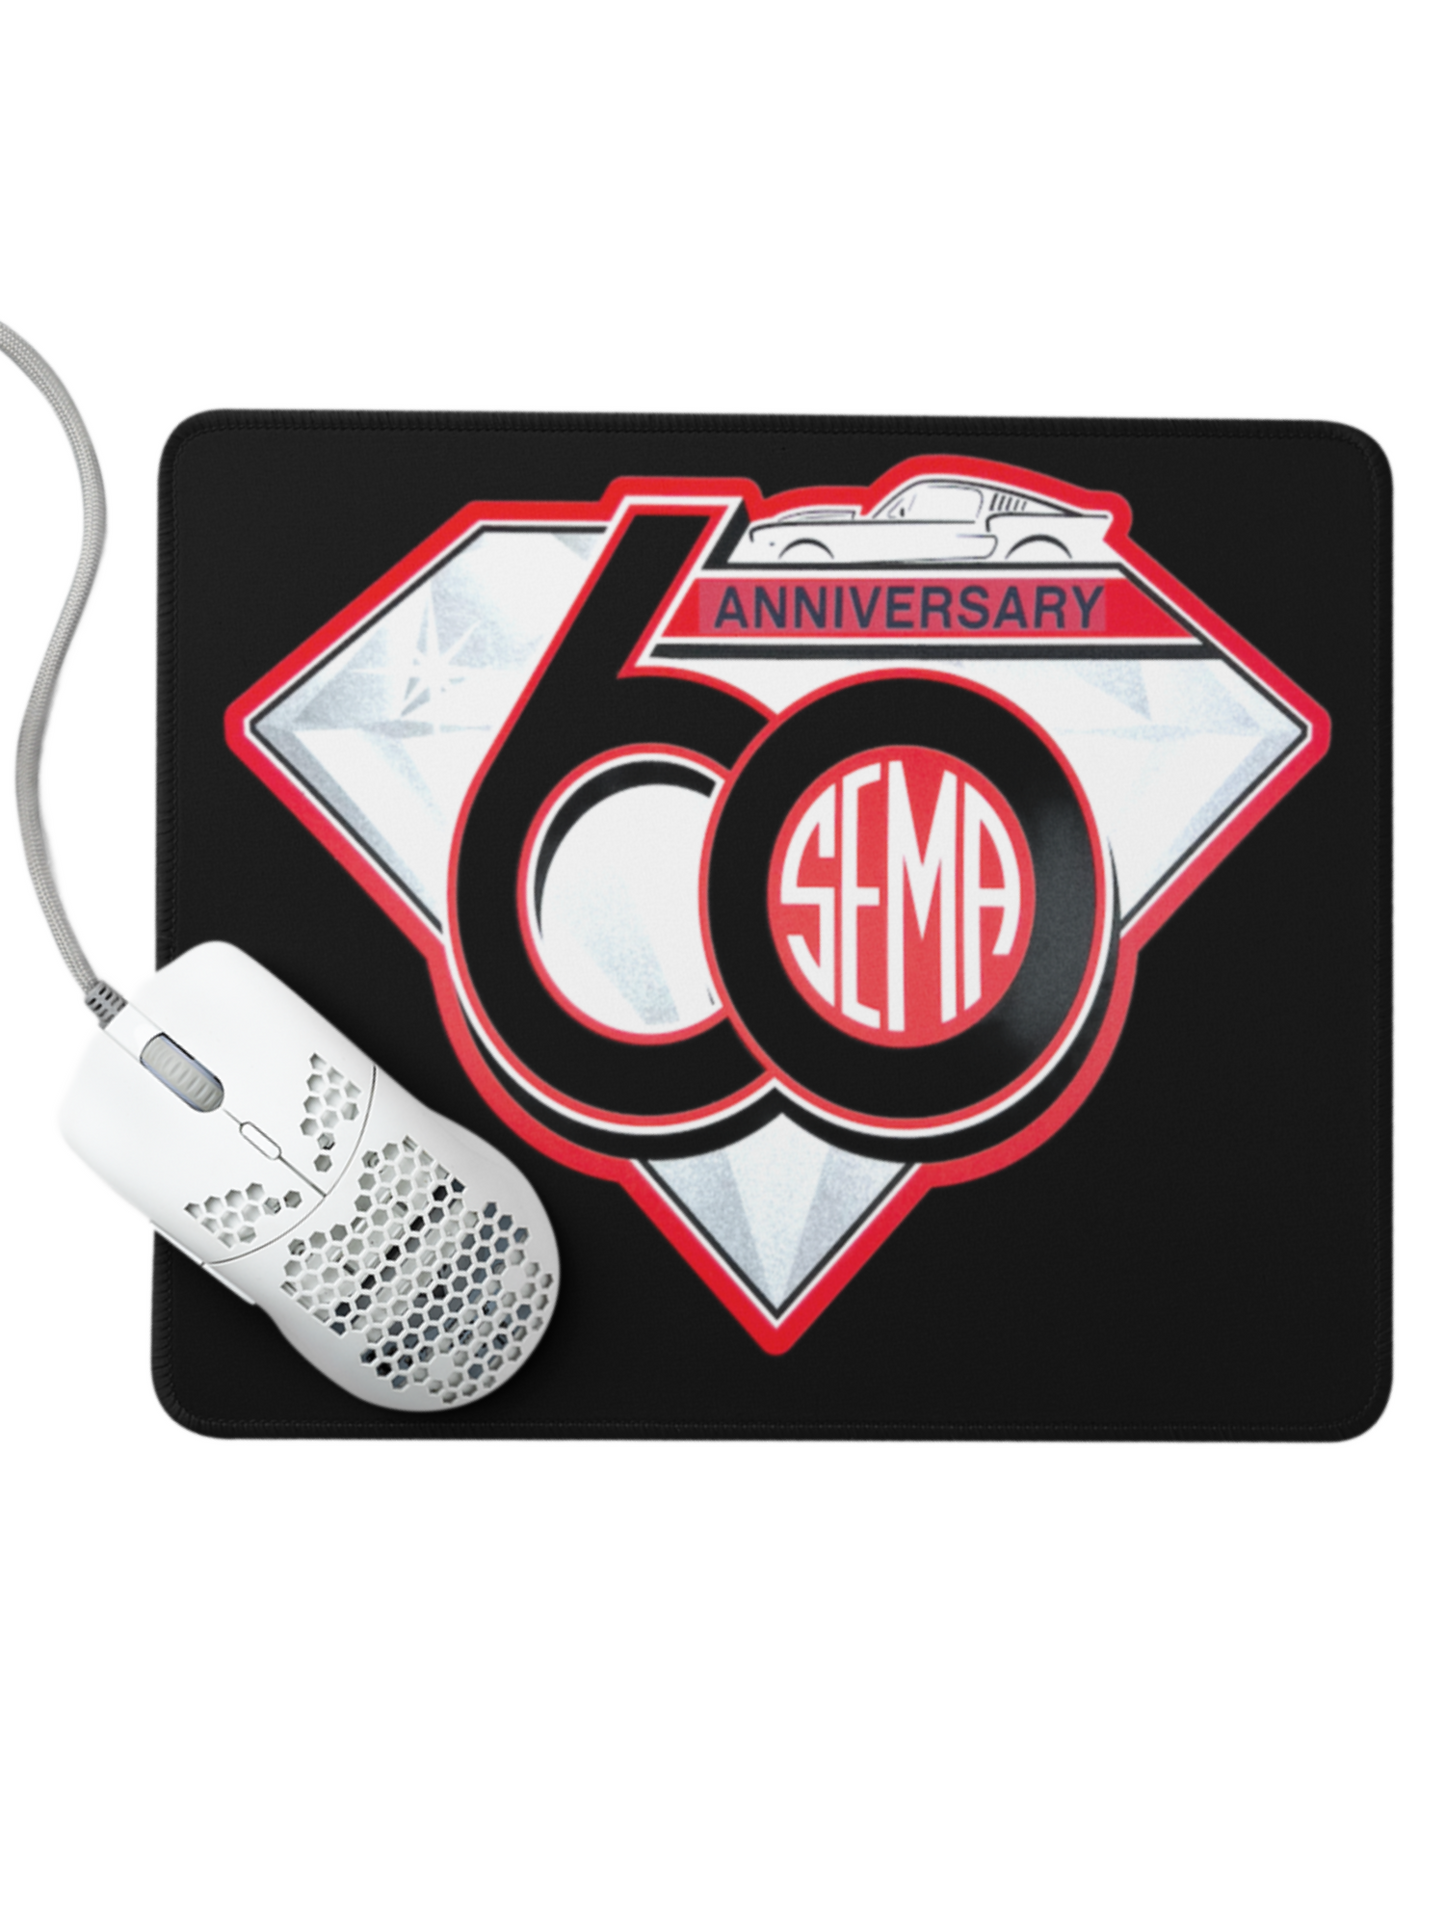 2023 SEMA - 60th Anniversary - Ultra-Thin Mouse Pad